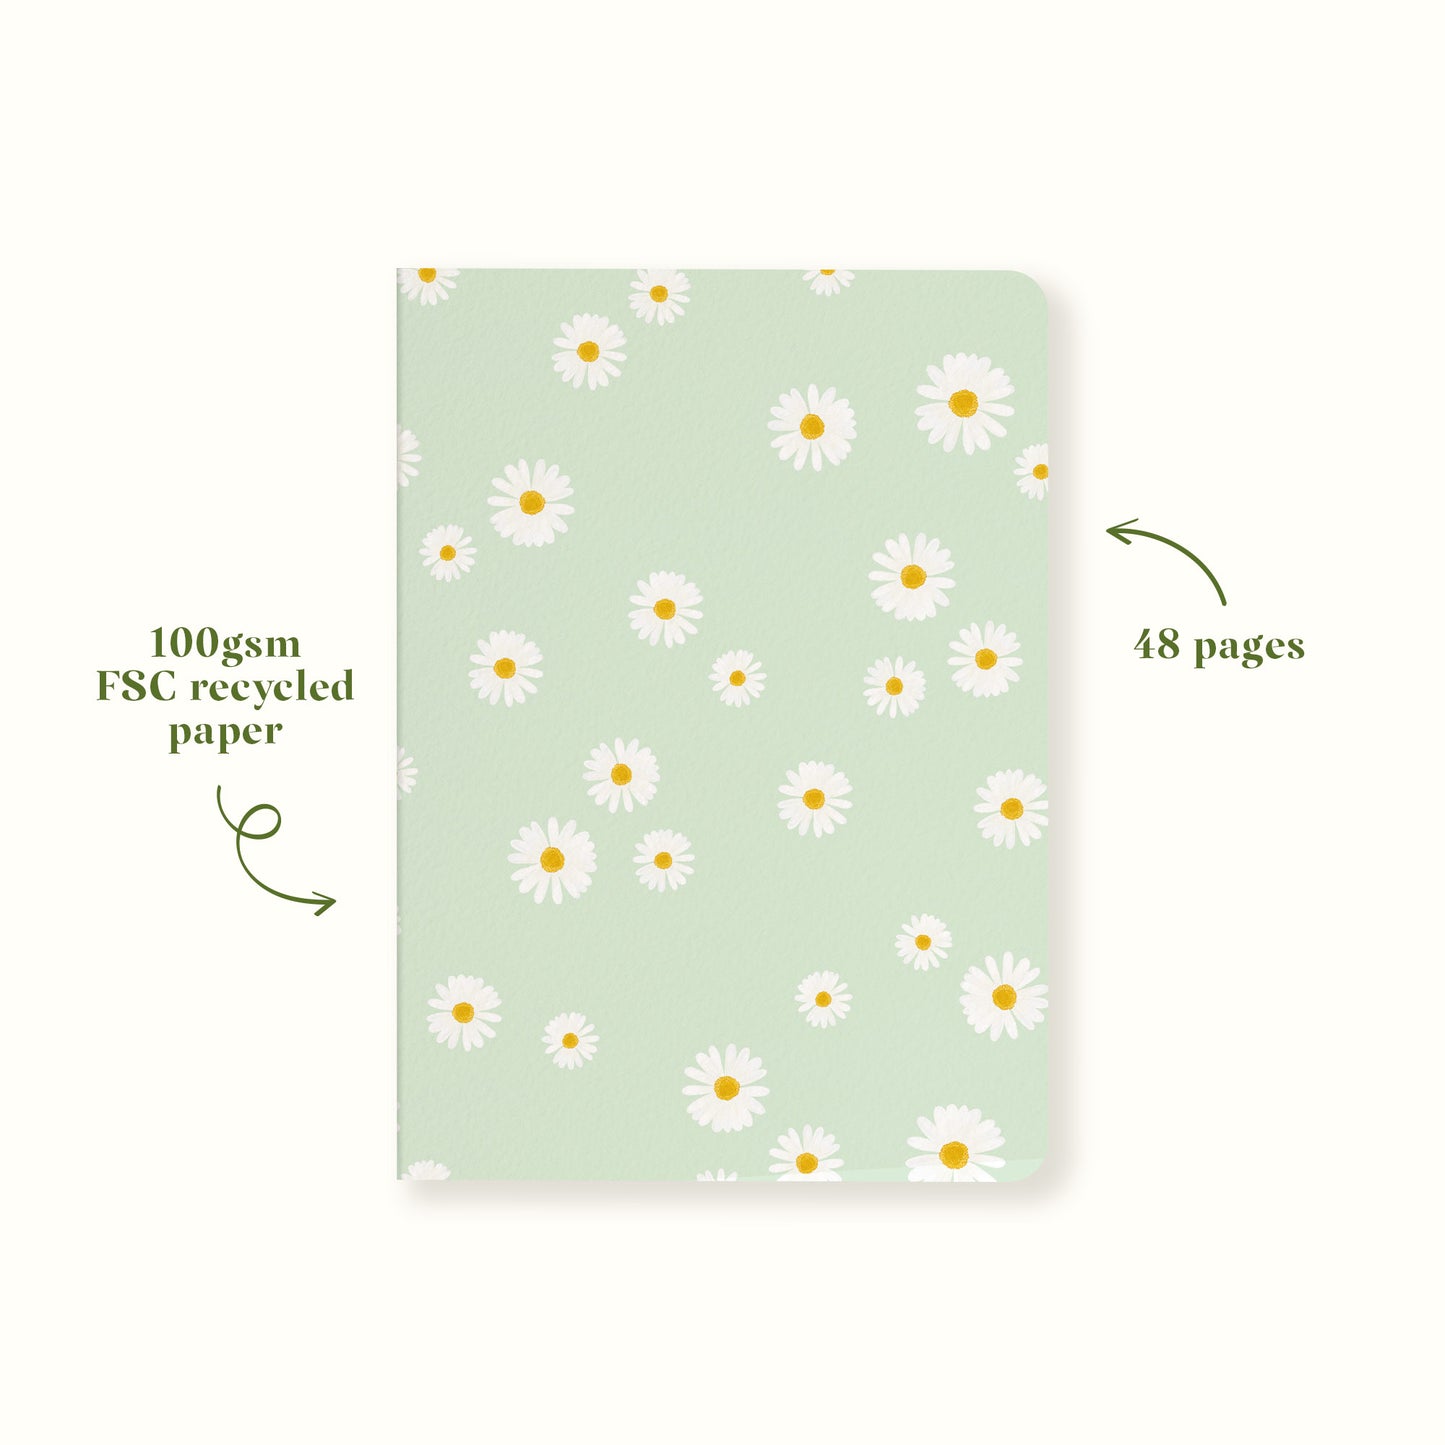 A5 Notebook Field of Daisies Mint Green